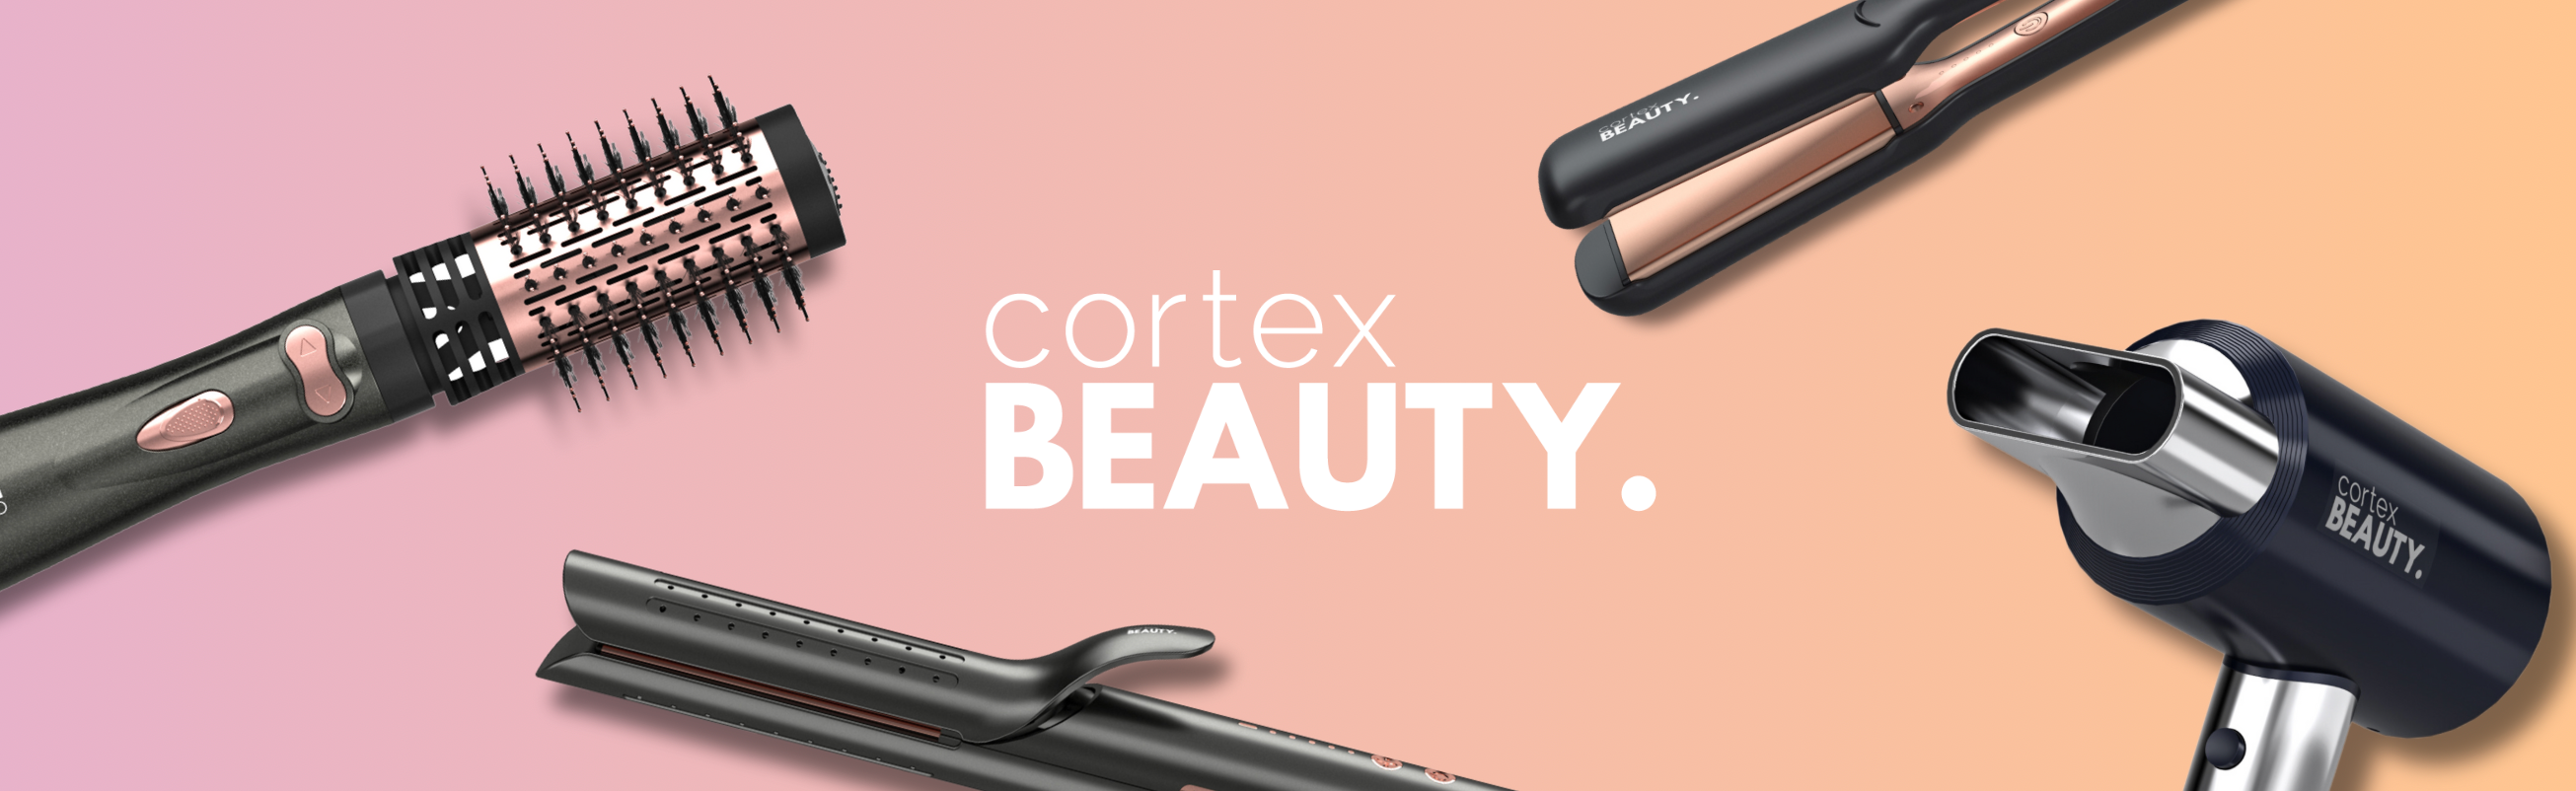 Cortex Beauty Air Styler 4-in-1 Hot Air Styler Brush - Black